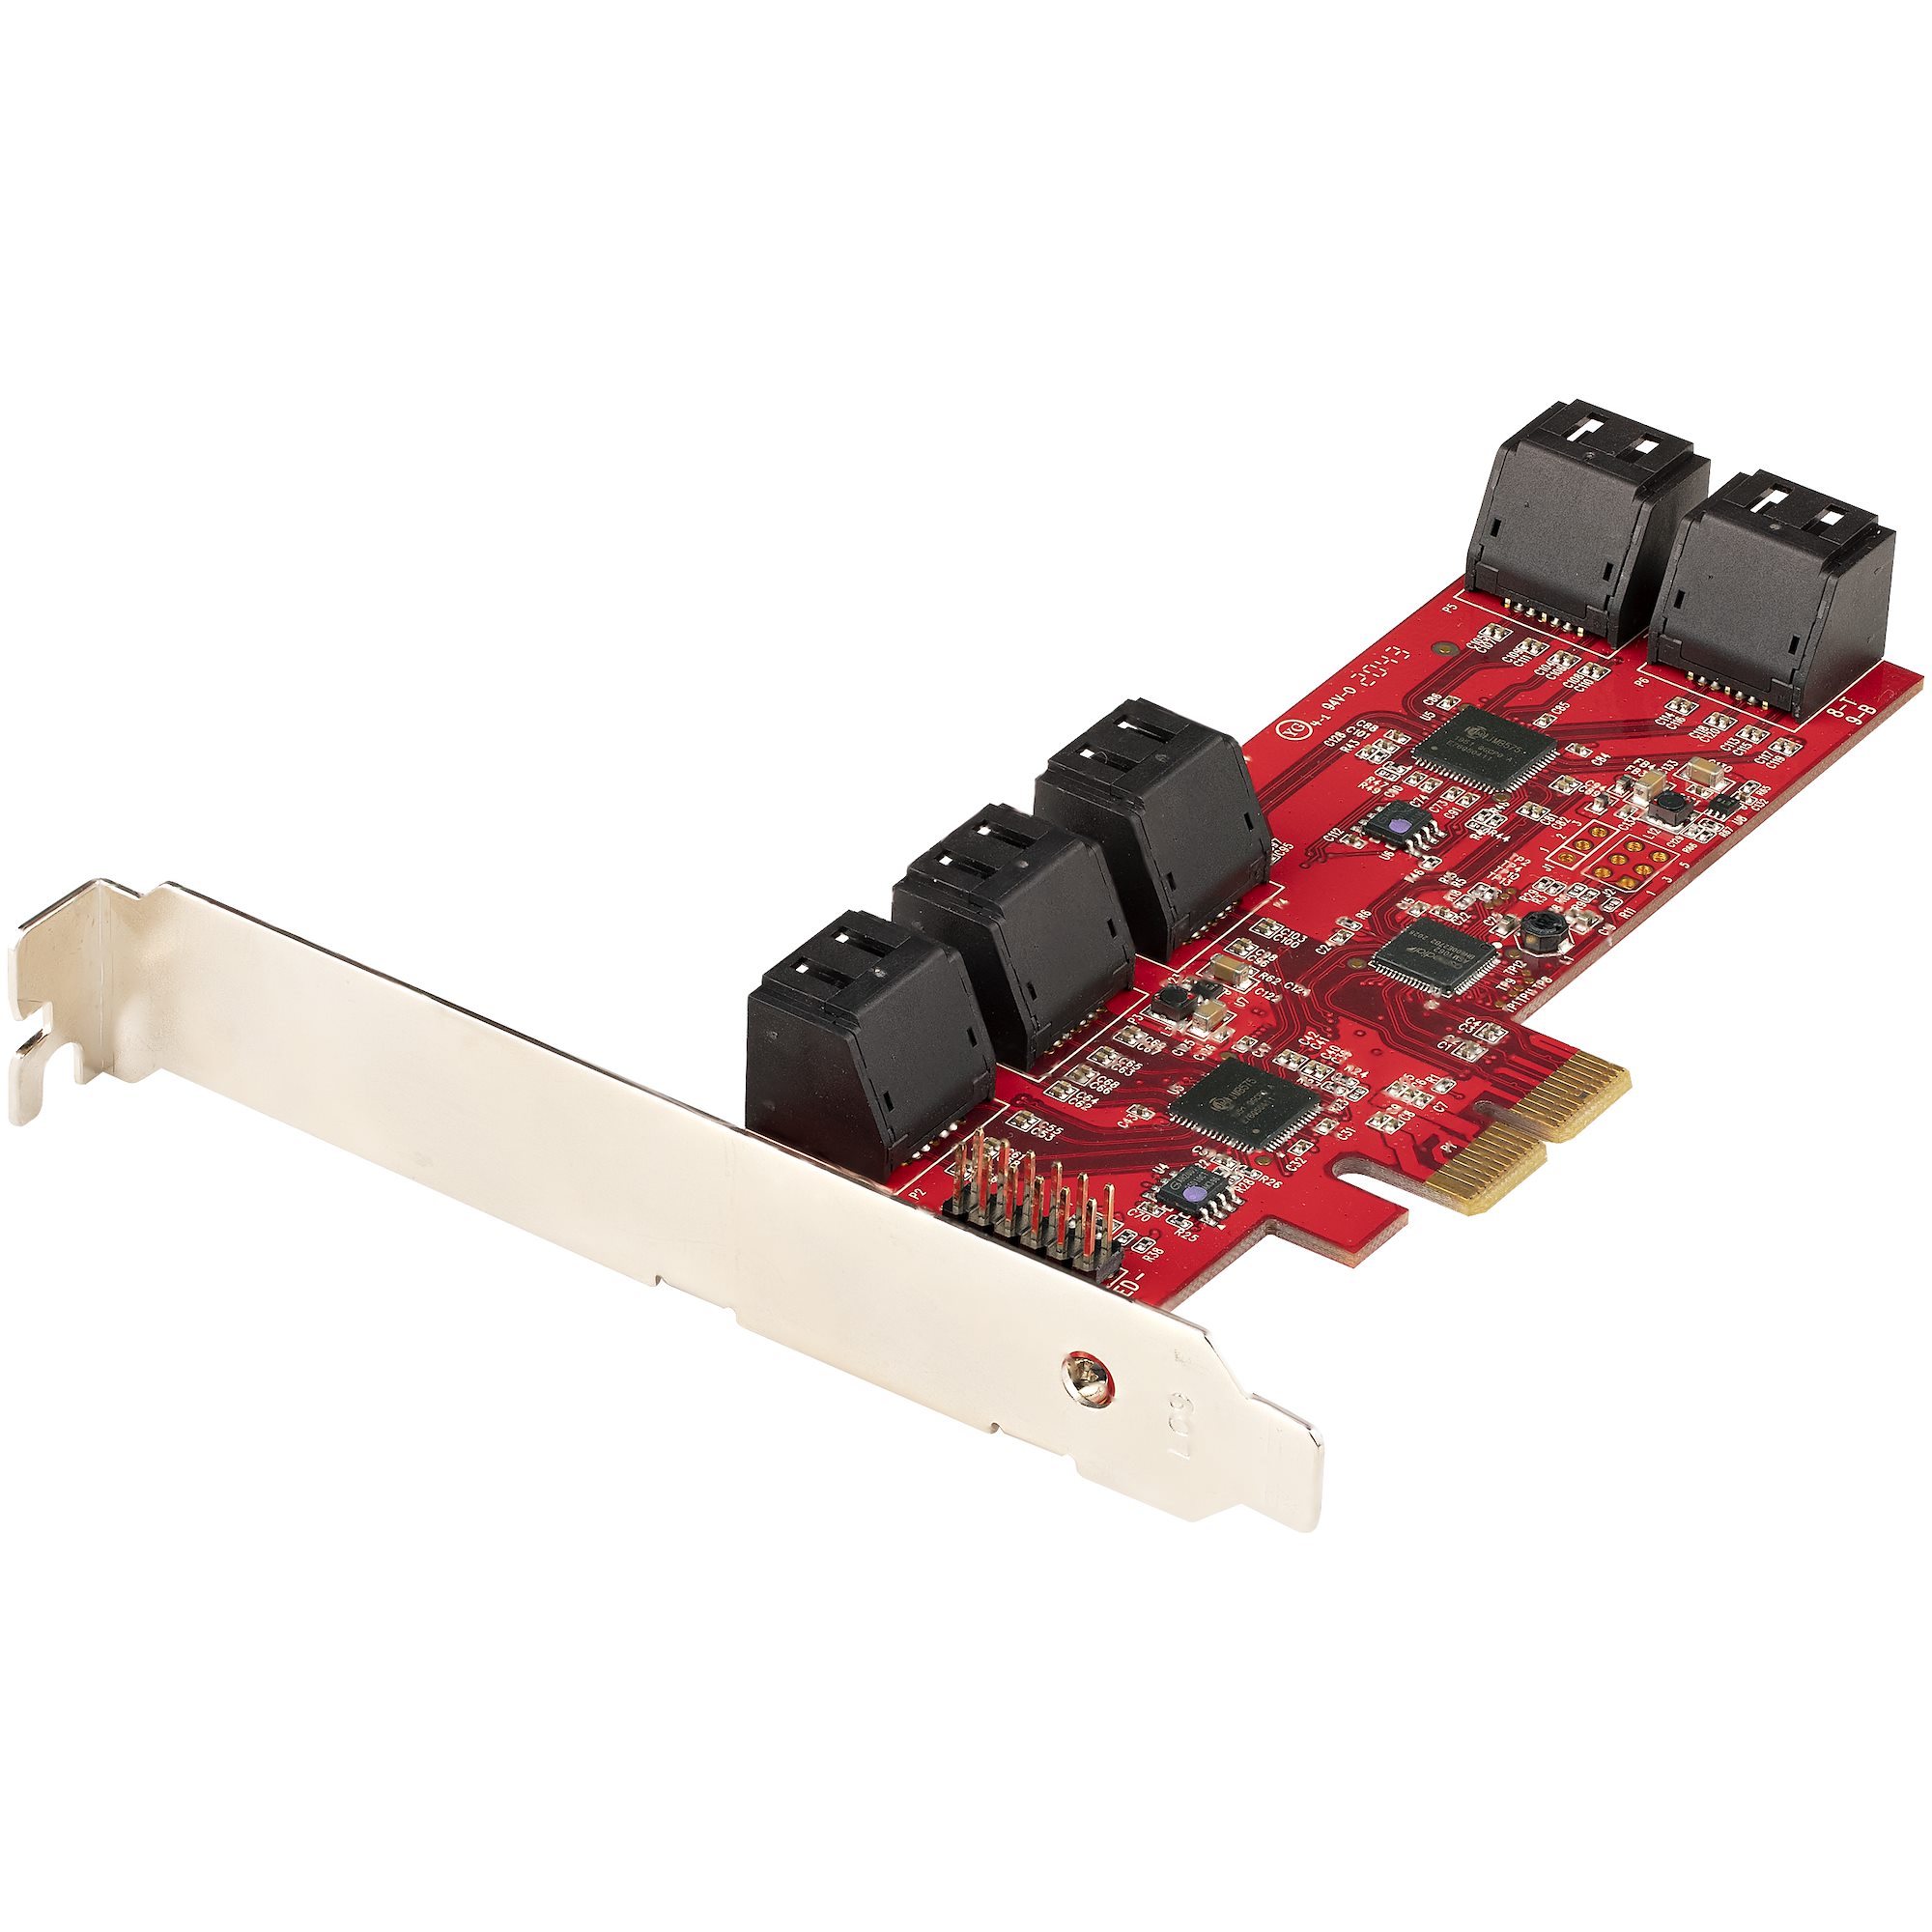 【10P6G-PCIE-SATA-CARD】10-PORT SATA PCIE CARD - 6GBPS